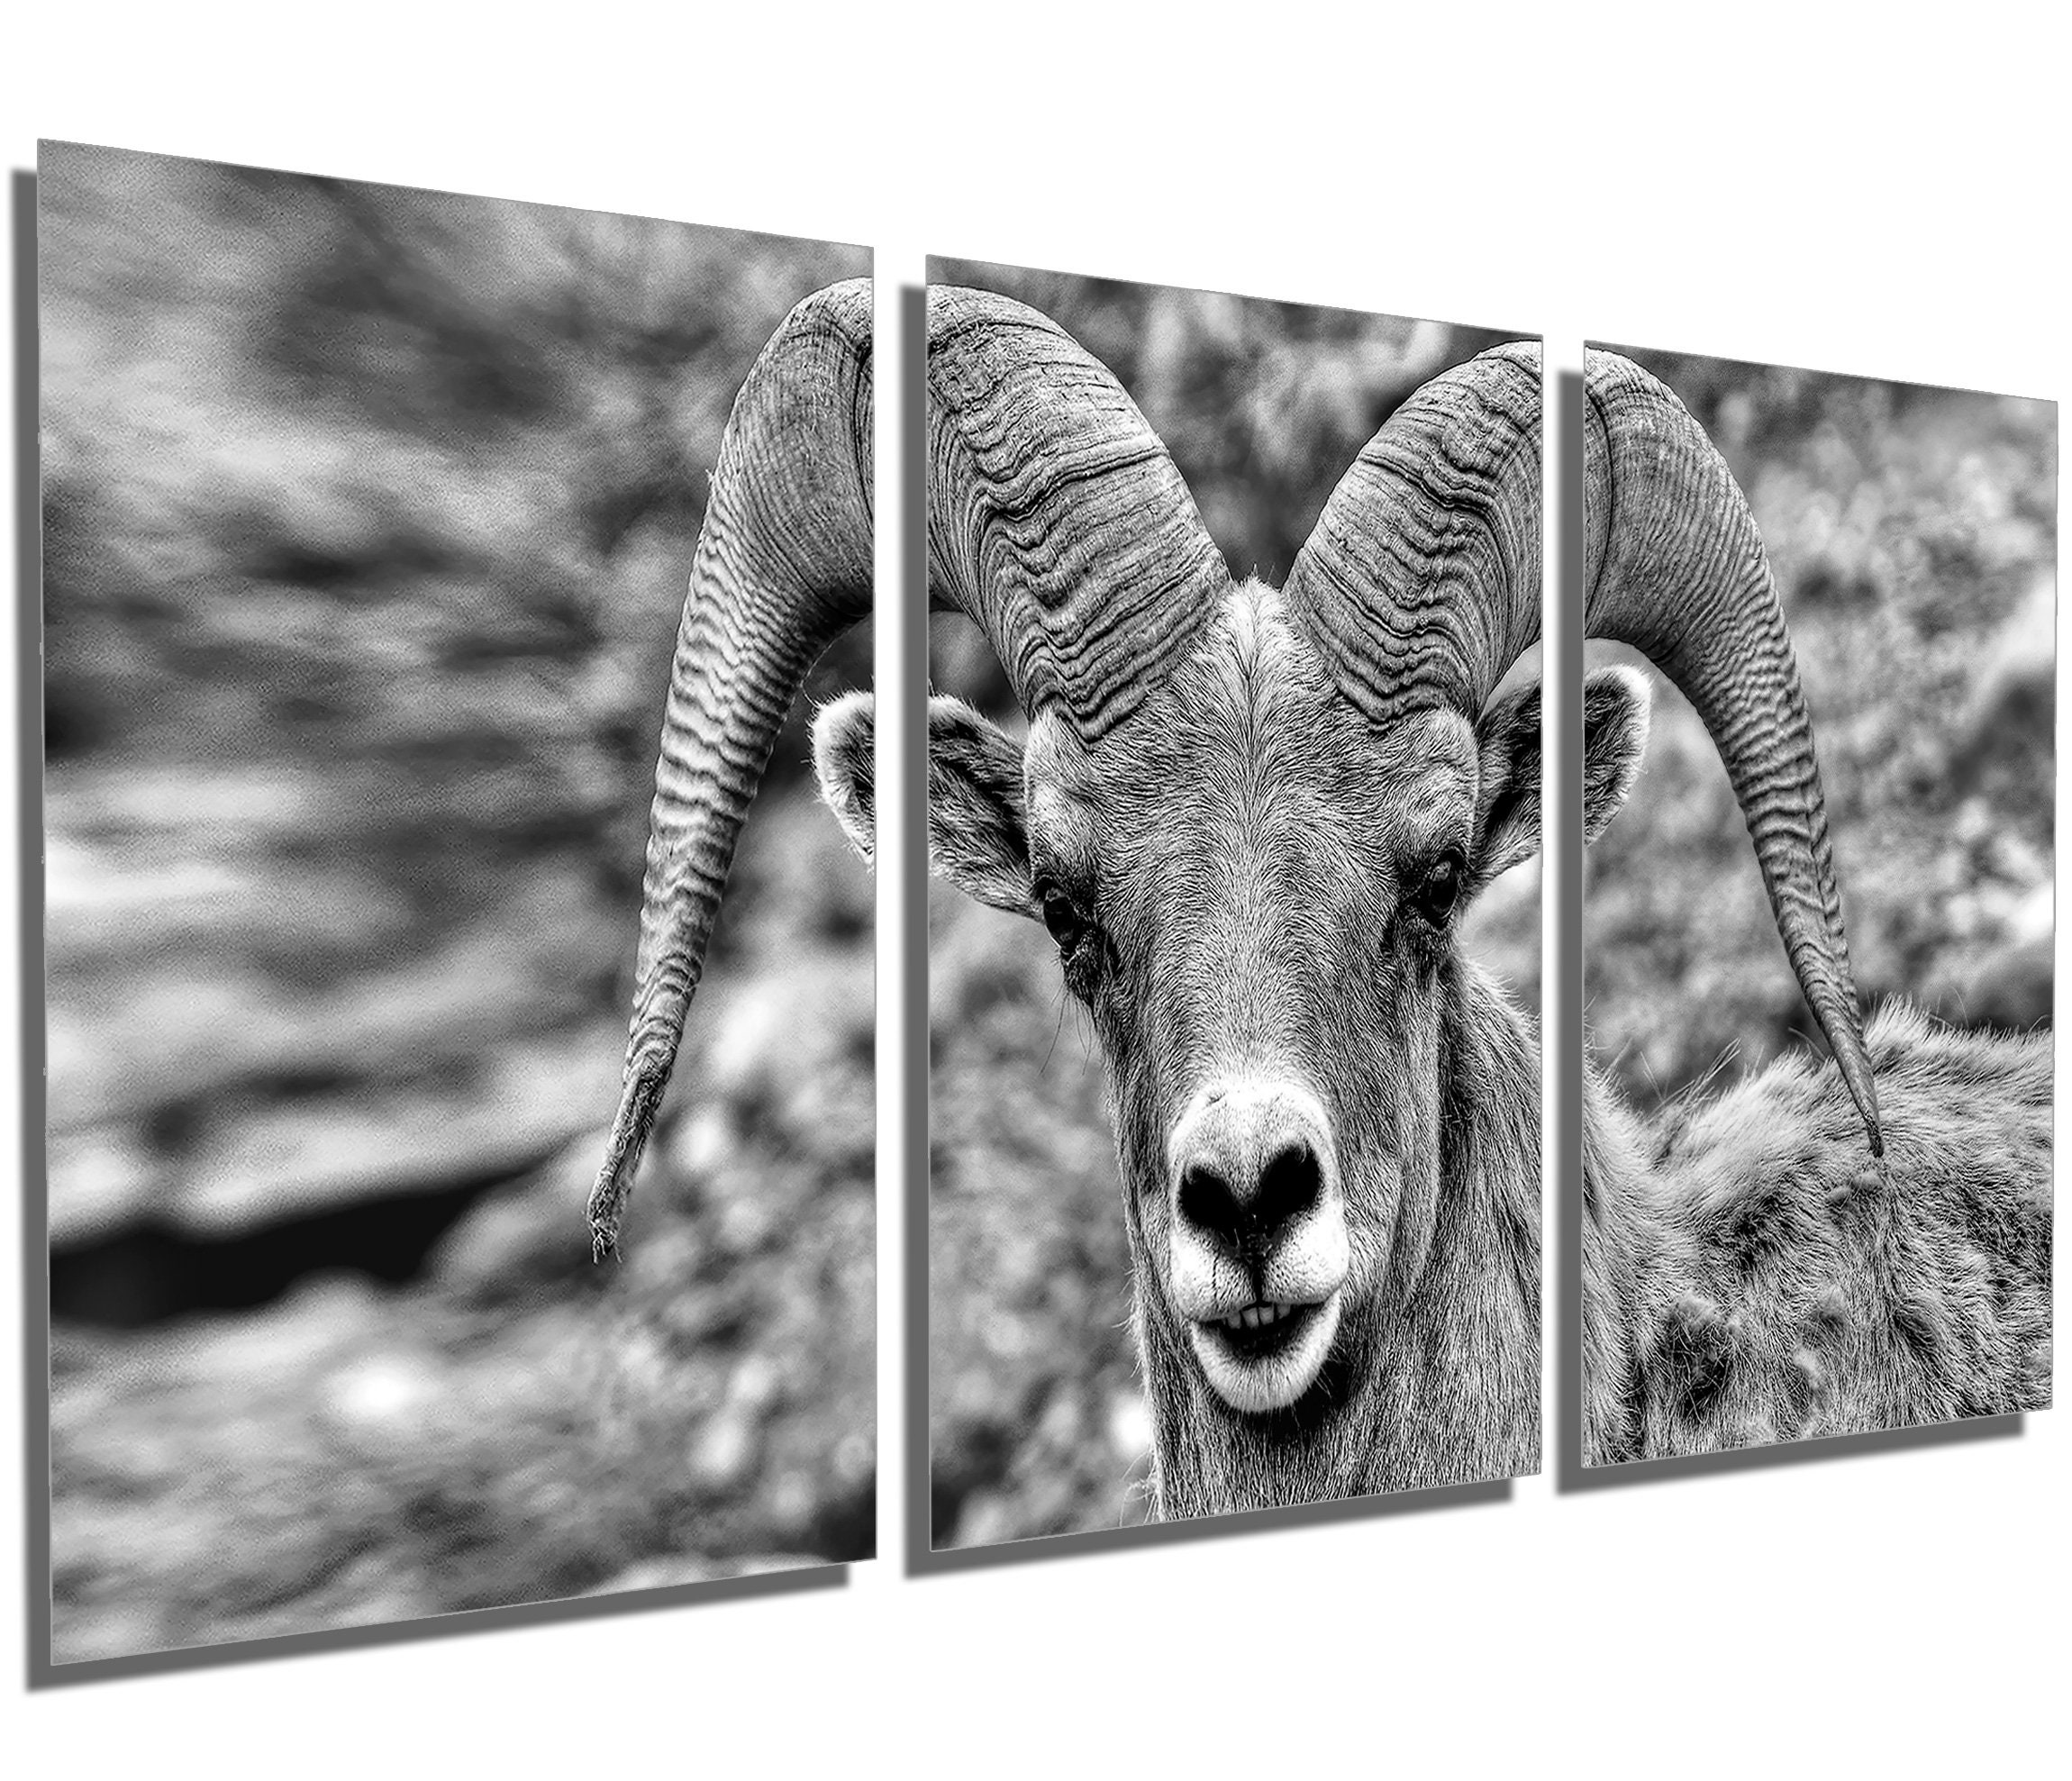 Metal Prints - Big Horn Sheep, Ram Grayscalse 3 Panel Split, Triptych Wall Art Hd Aluminum Prints Decor, Interior Design